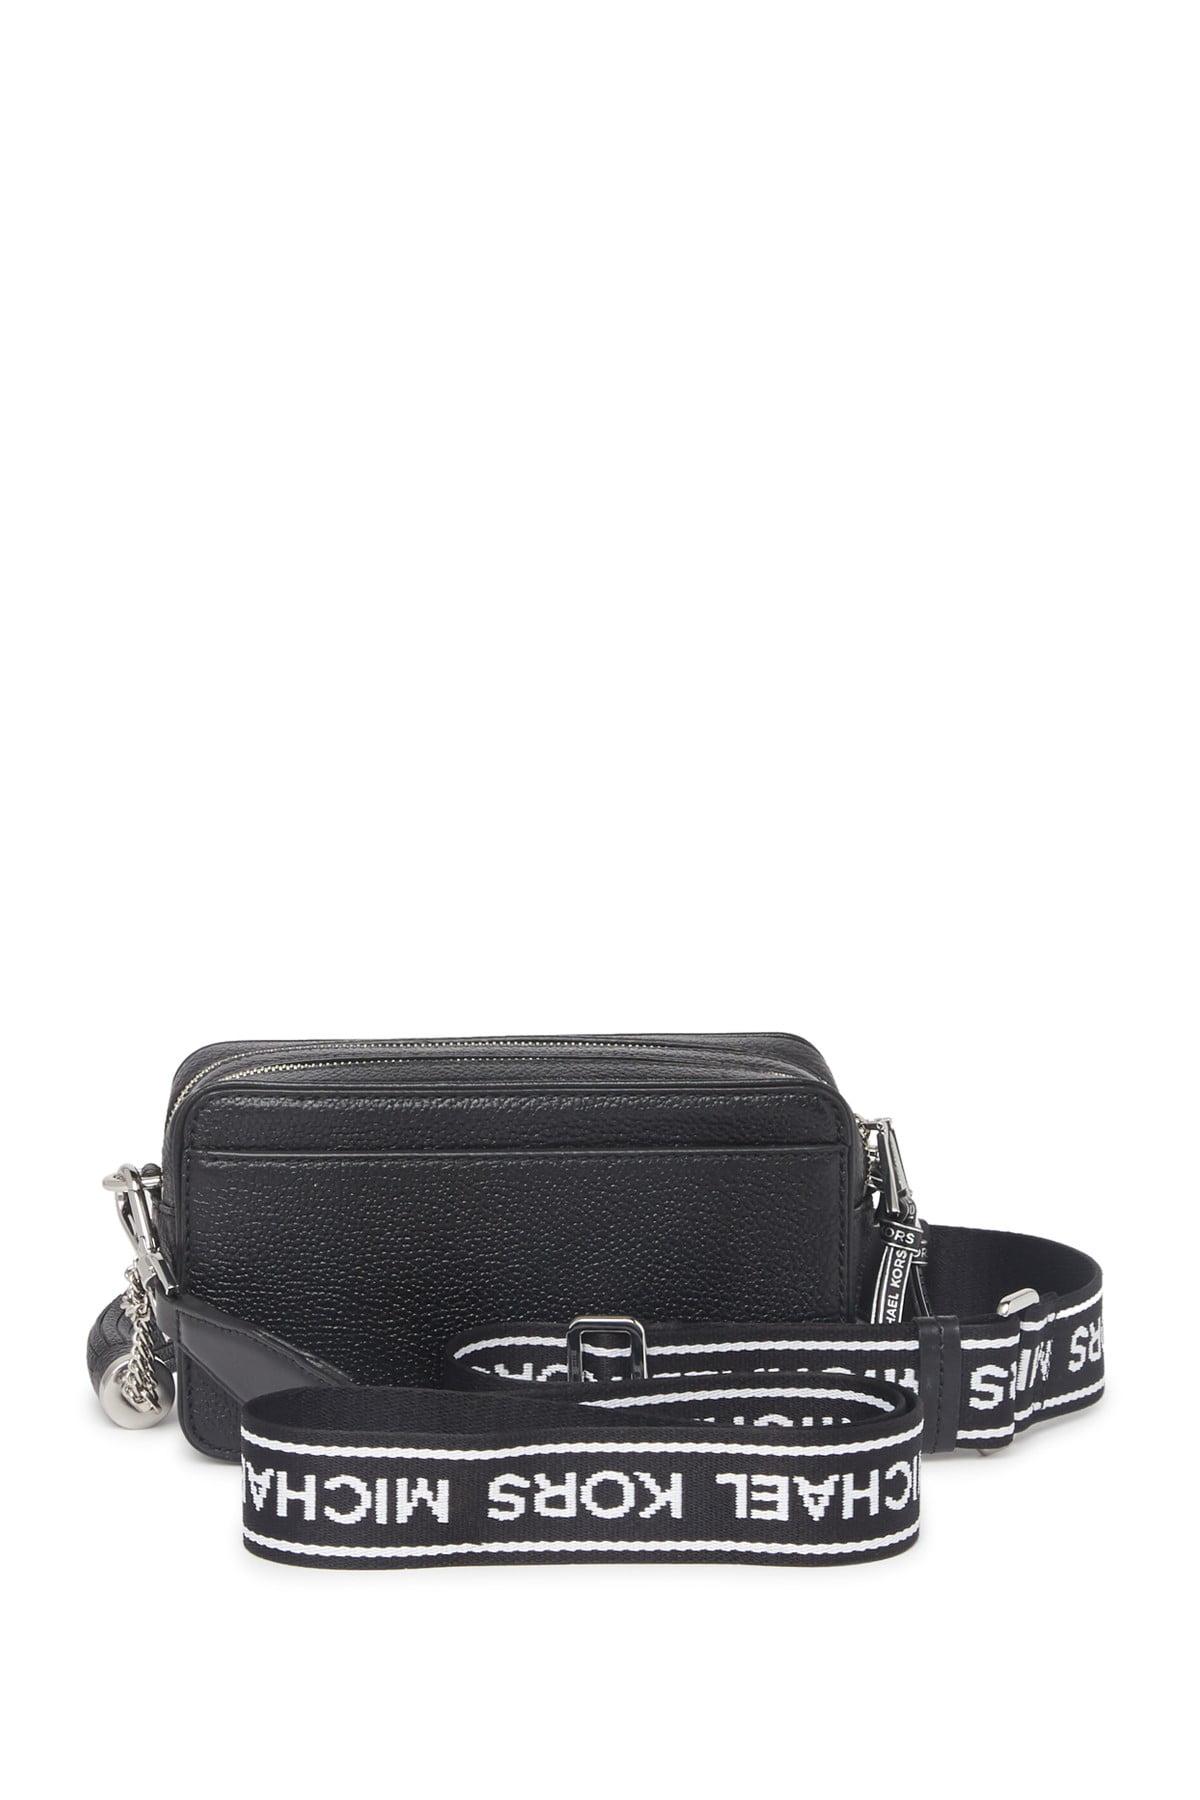 Michael Kors Small Camera Bag Black/Silver